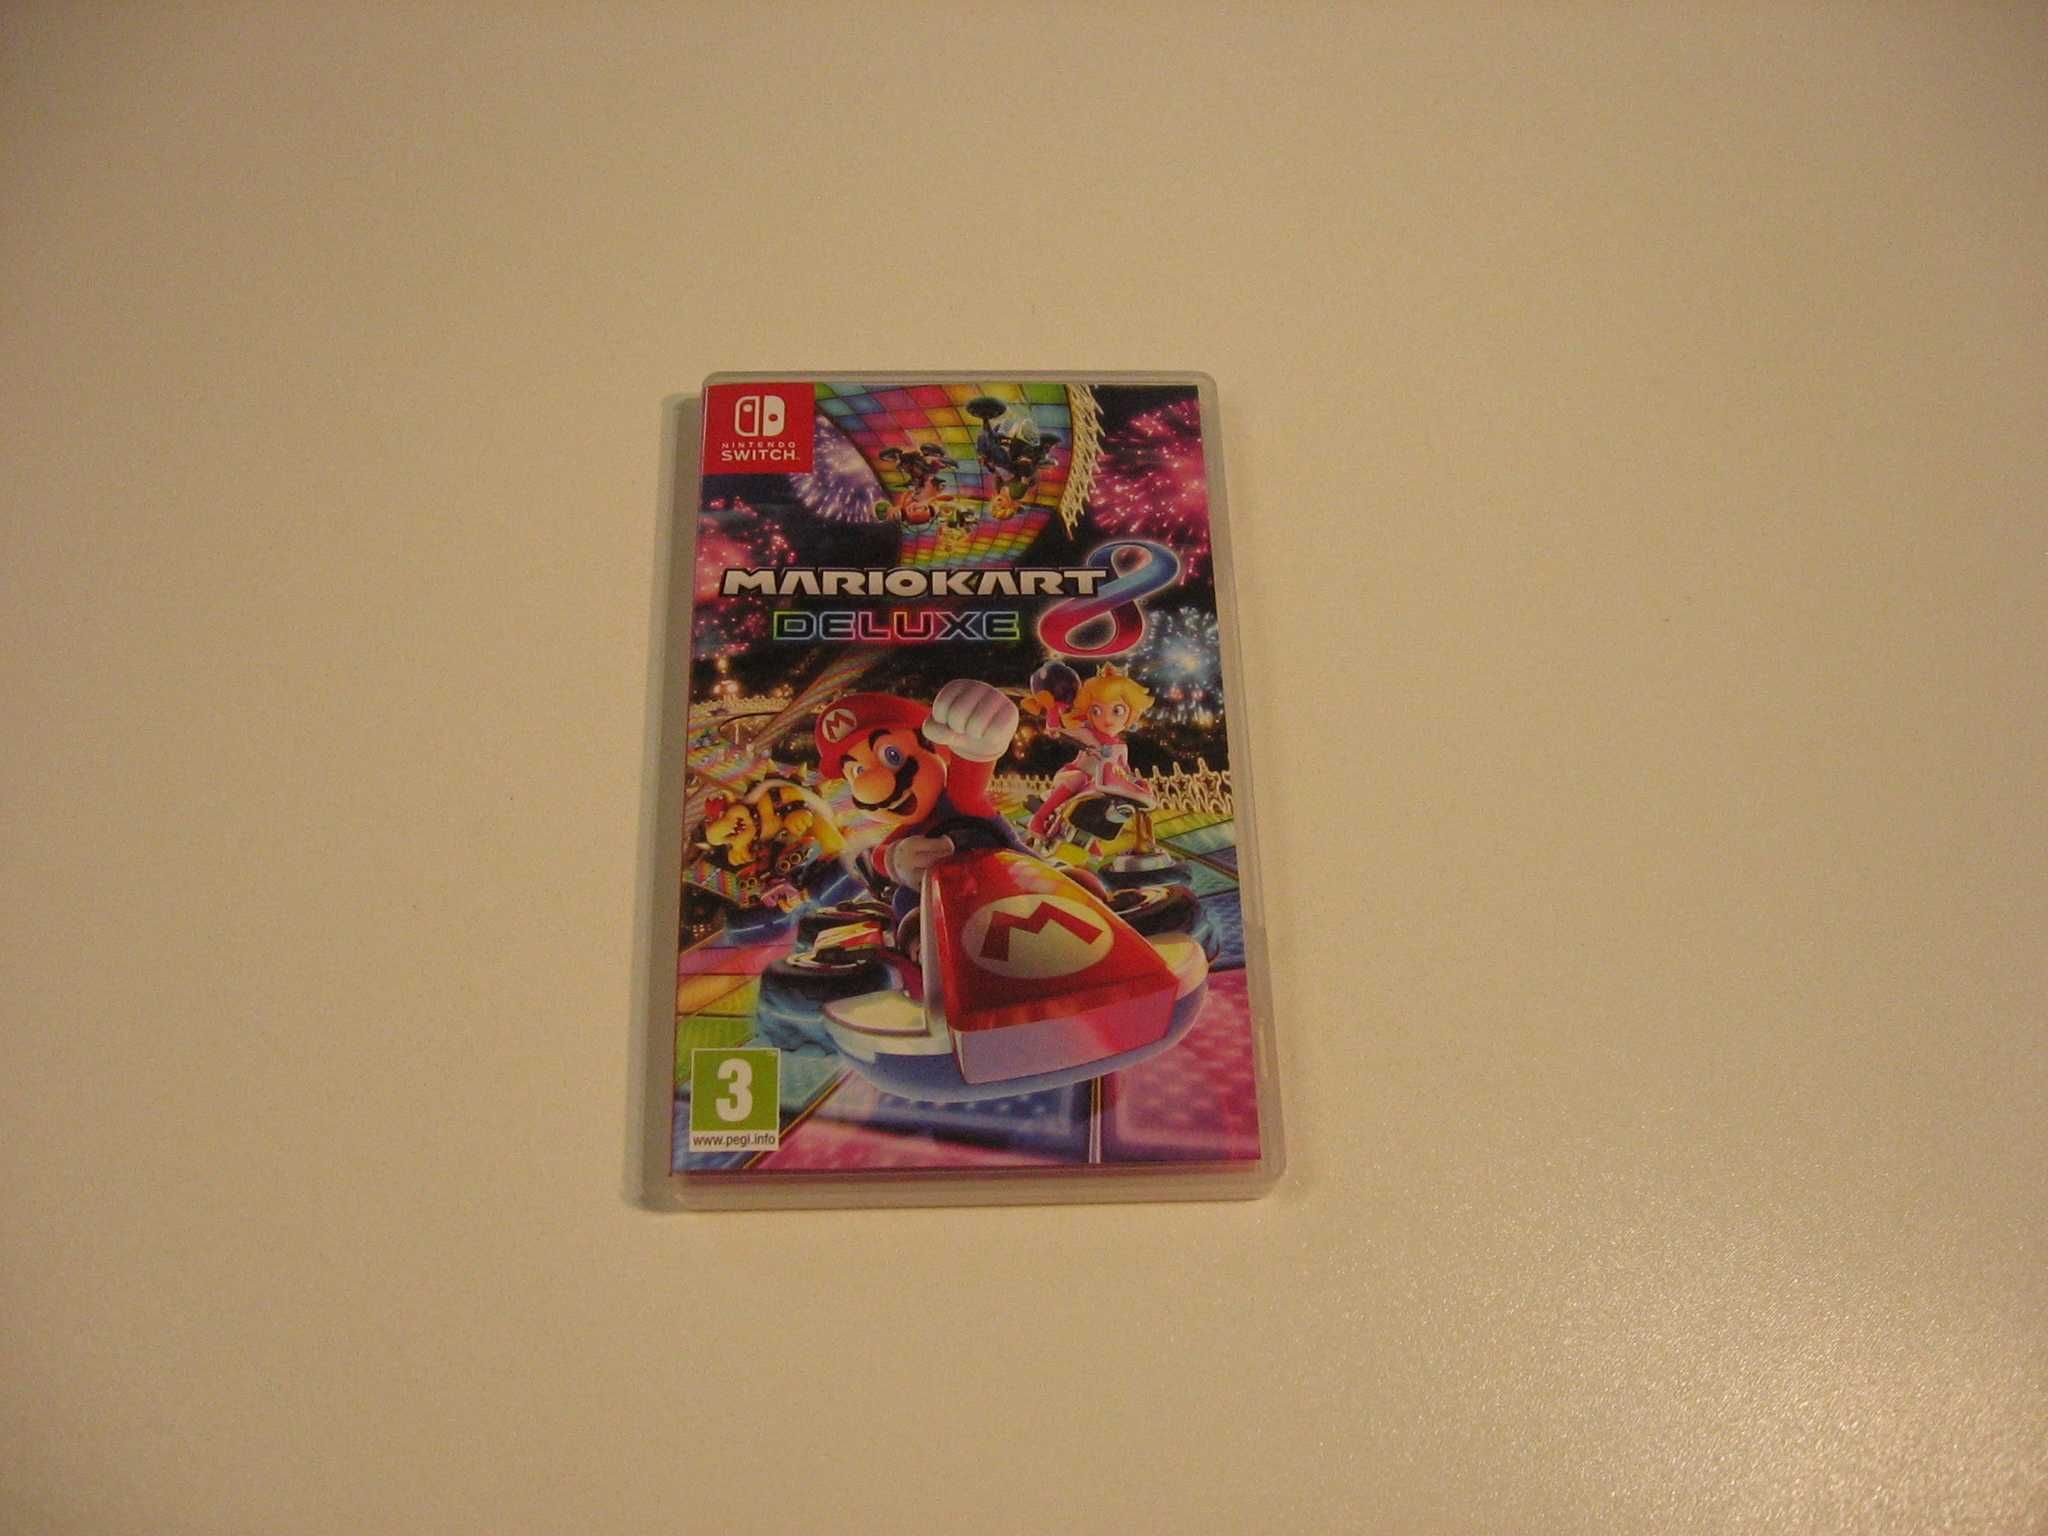 Mario kart 8 deluxe Mariokart - GRA Nintendo Switch - Opole 2765